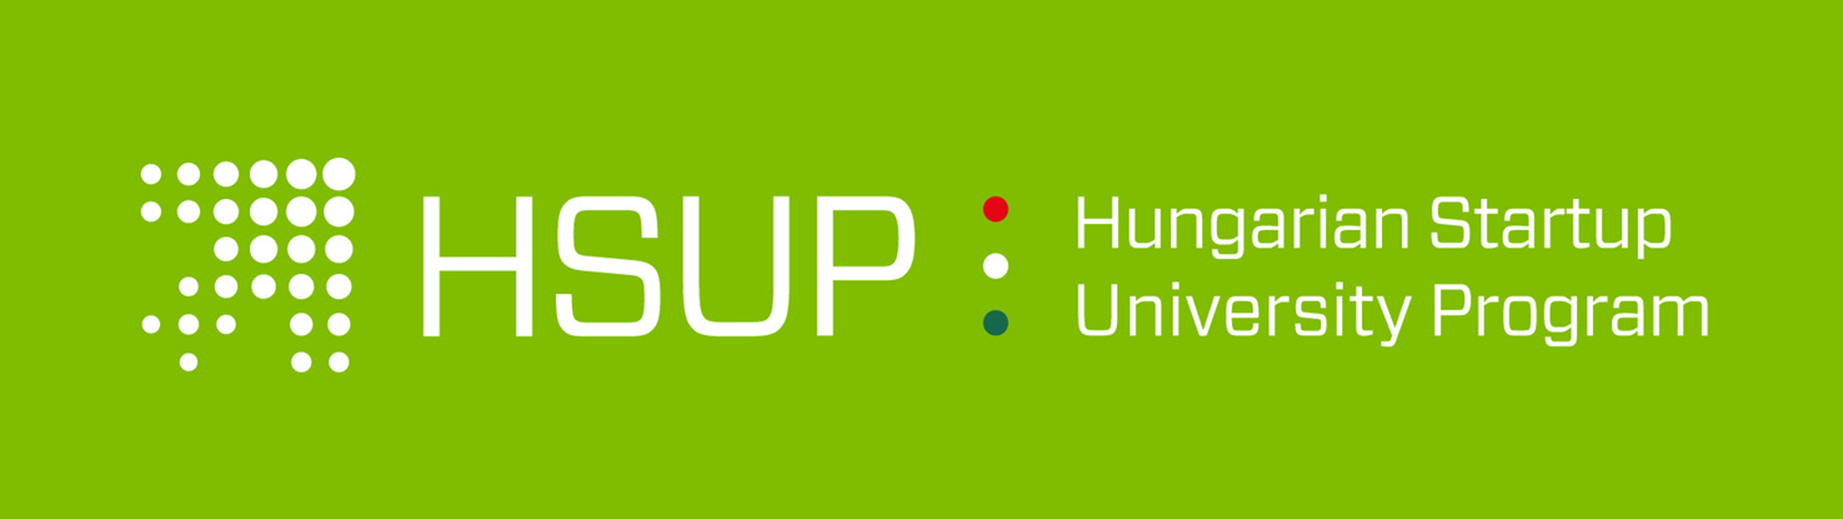 HUNGARIAN STARTUP UNIVERSITY PROGRAM (HSUP)